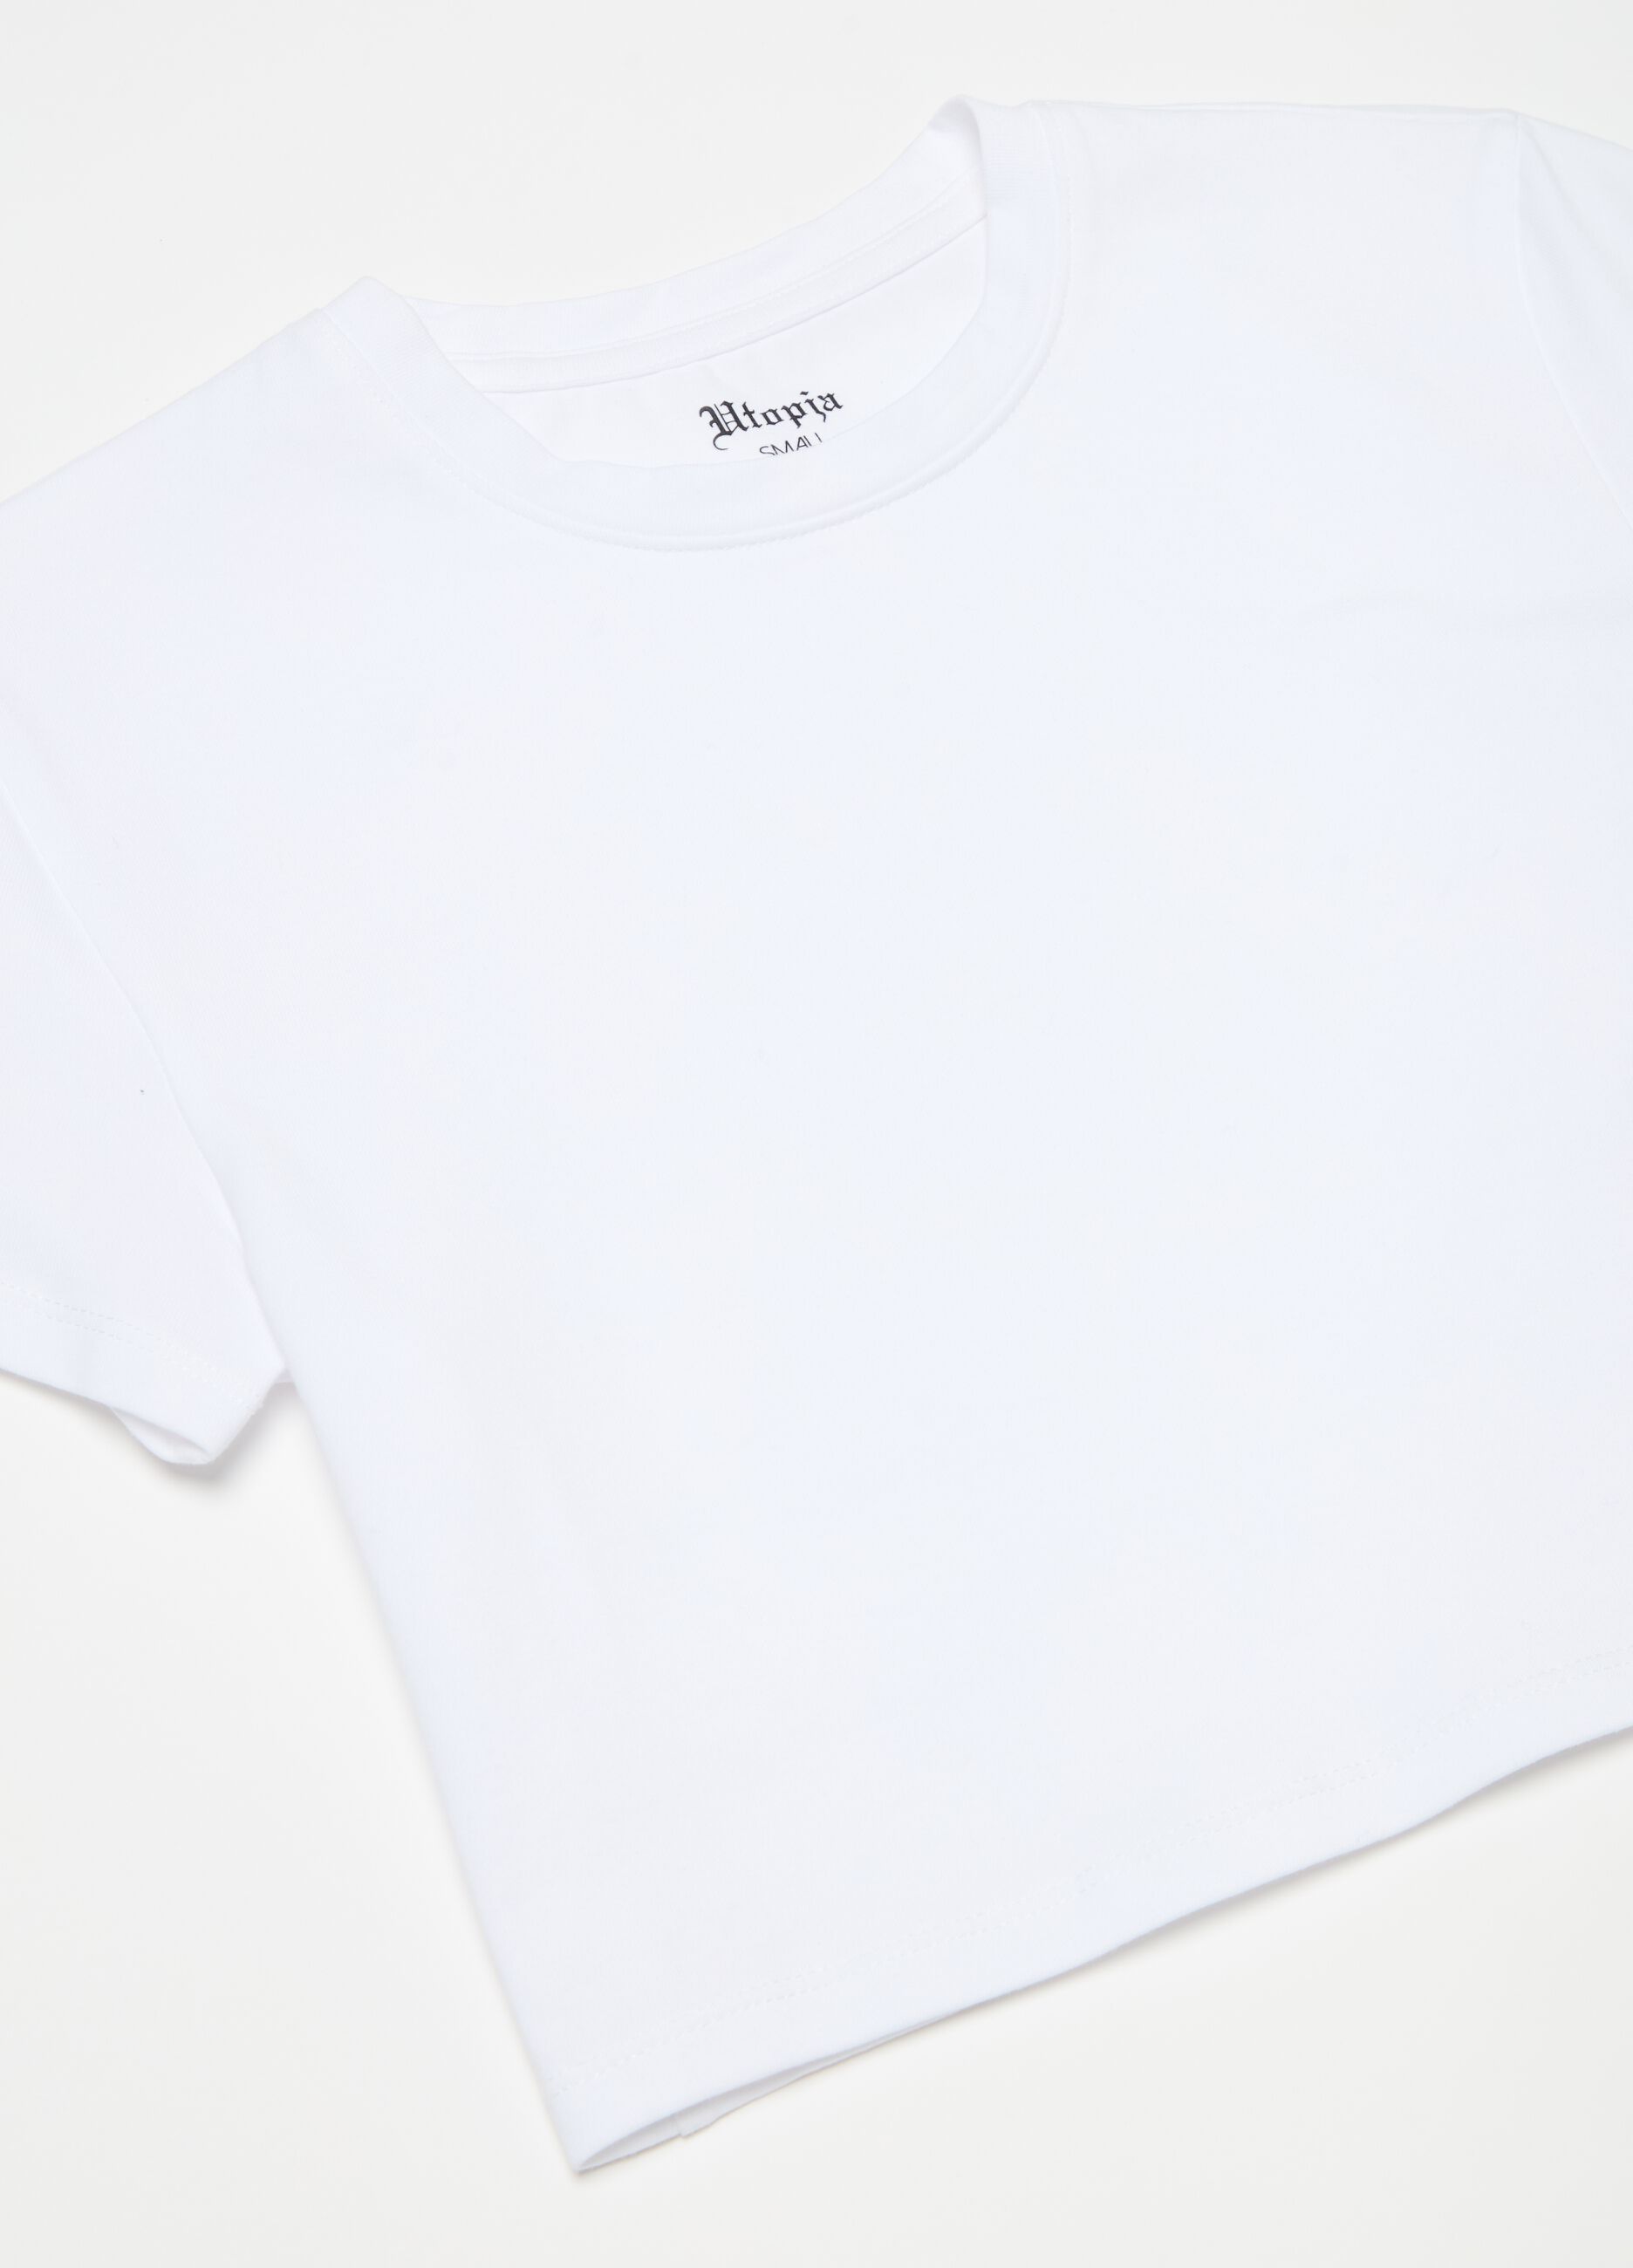 T-shirt Crop White